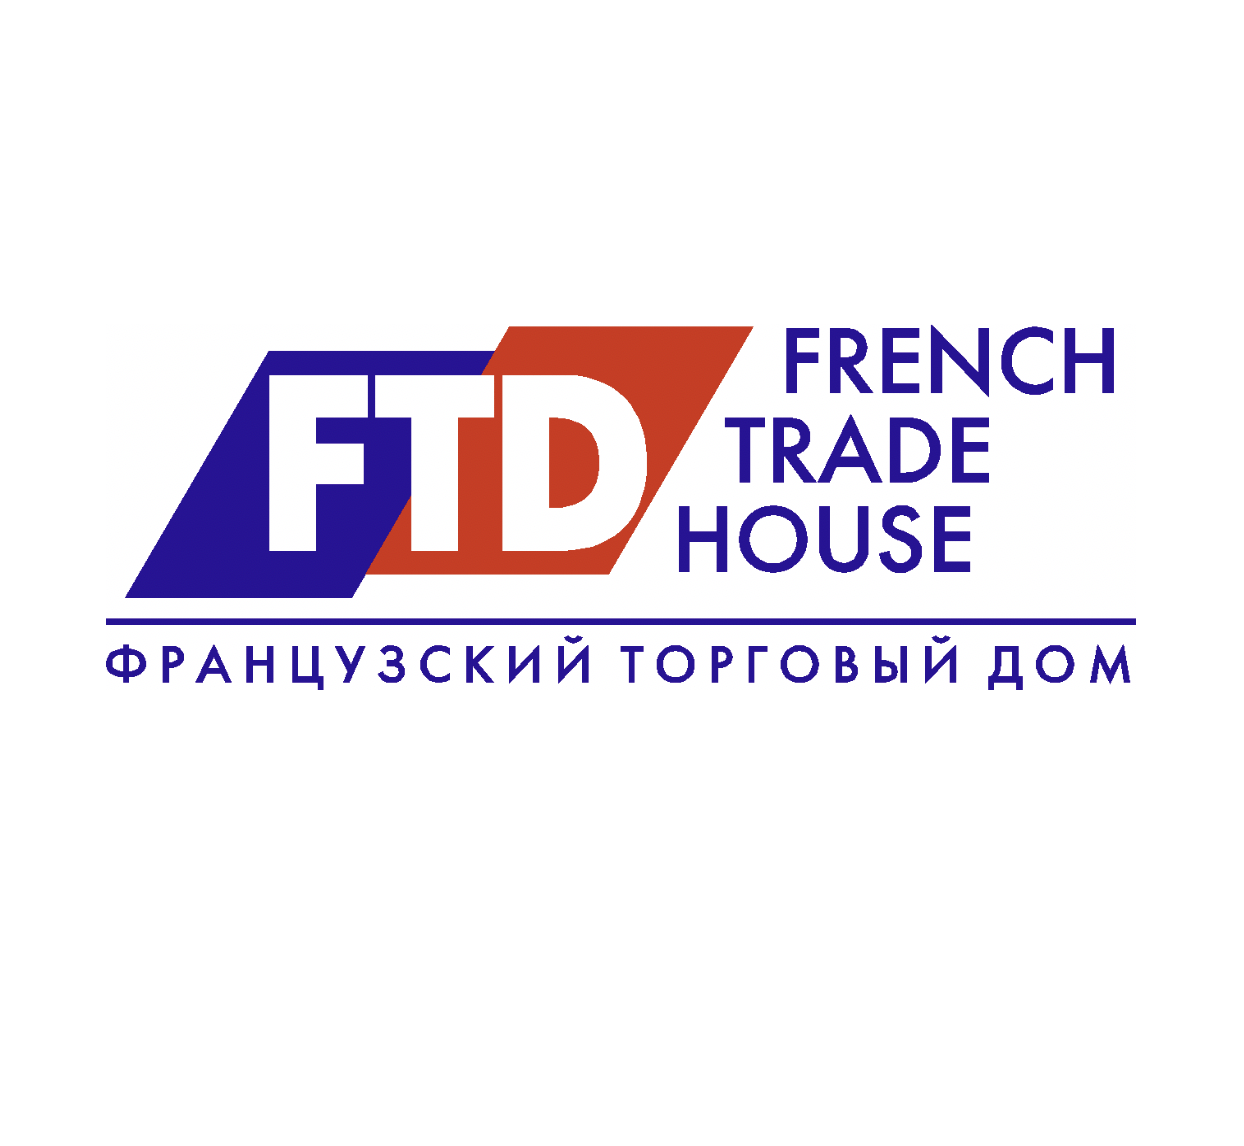 FTD Logo - File:FTD LOGO.png - Wikimedia Commons